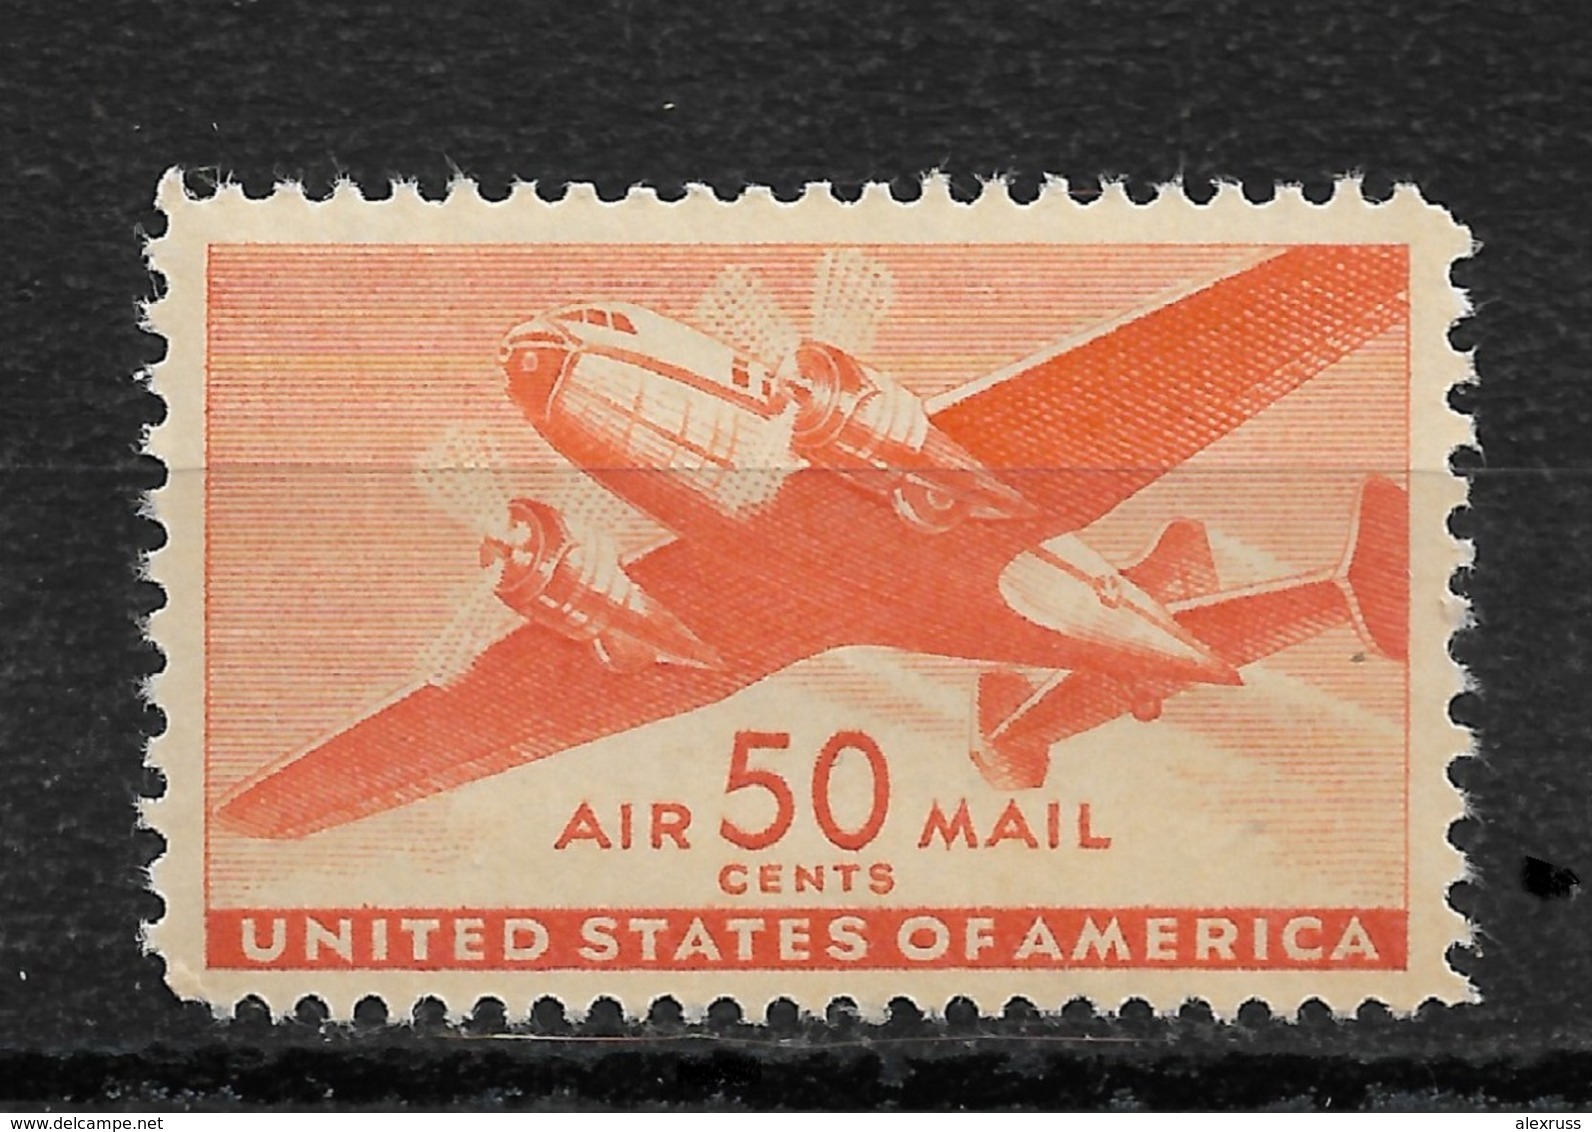 US 1941 Air Mail,50c Scott # C31,VF MNH** (RN-8) - 2b. 1941-1960 Nuovi